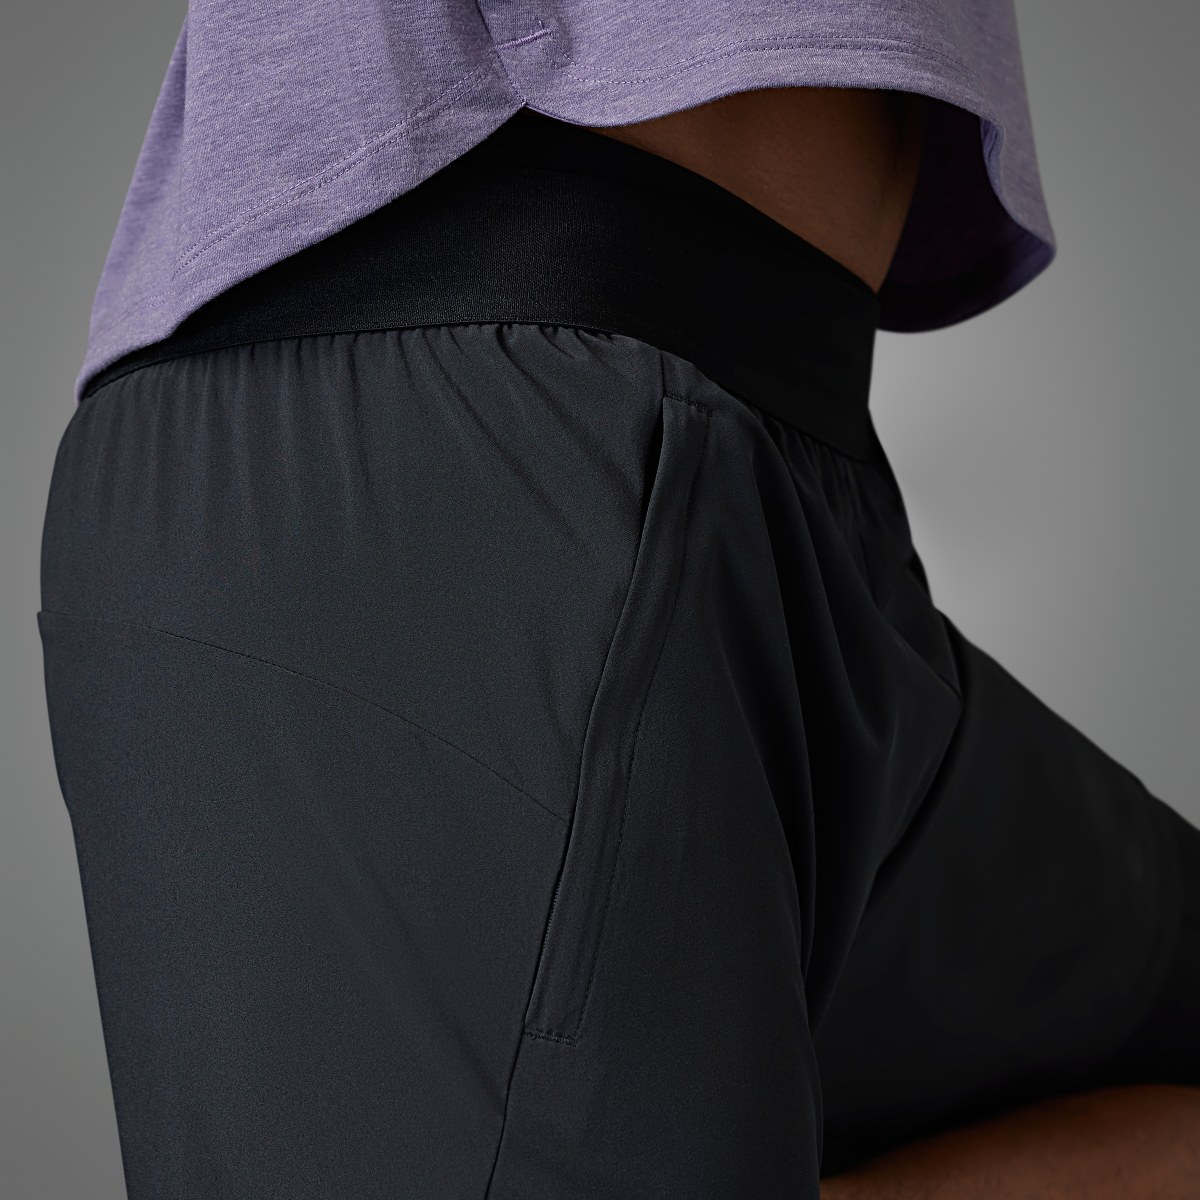 Adidas Yoga Premium Training Two-in-One Shorts. 6